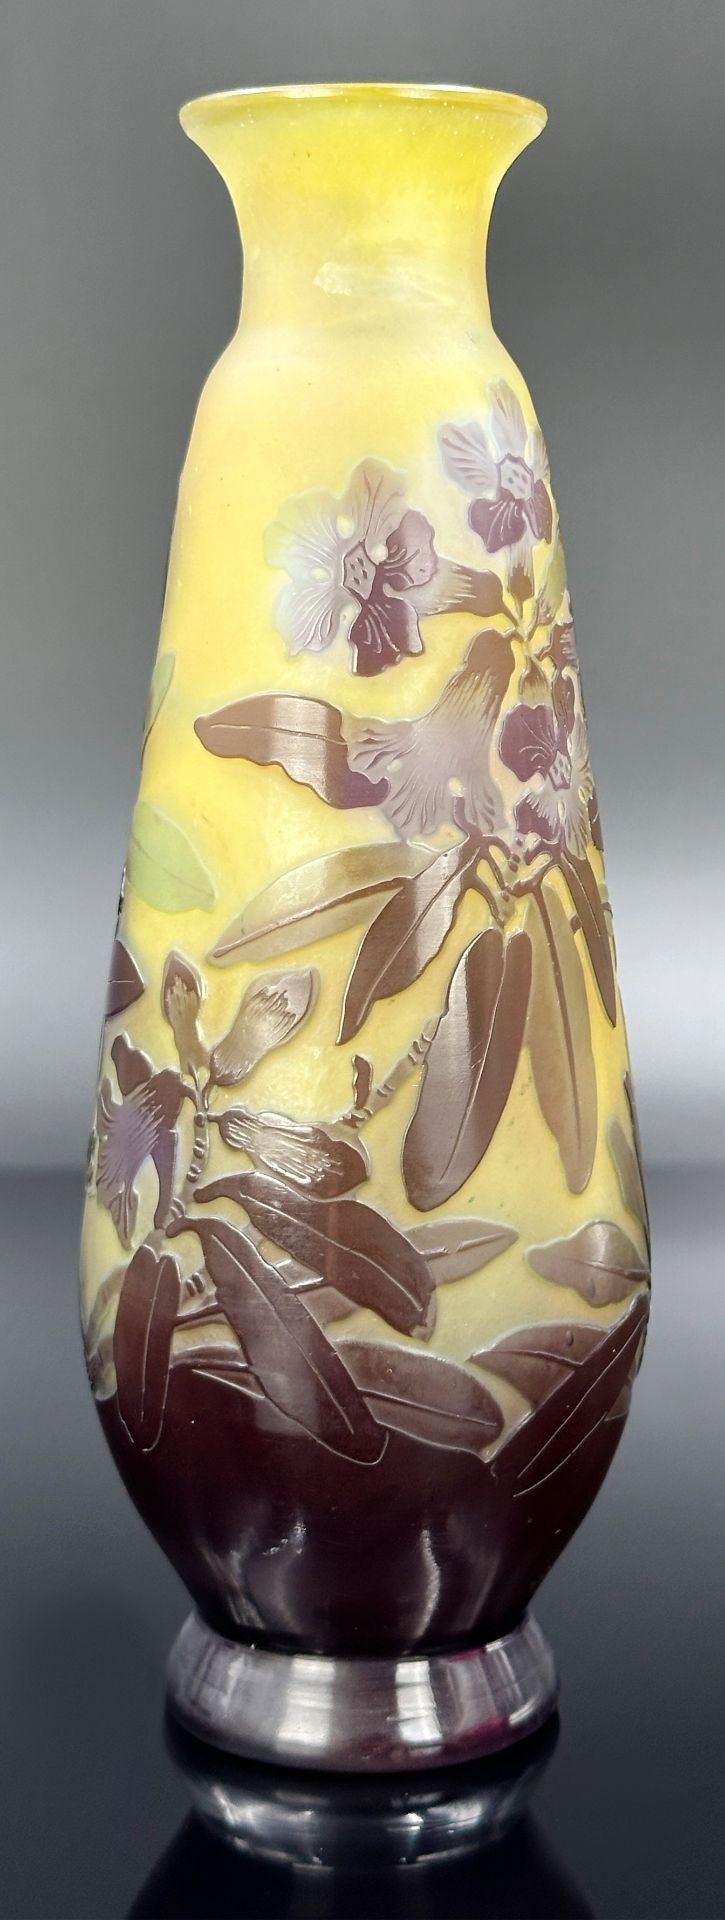 Small vase. Emile GALLÉ (1846 - 1904). Around 1900.